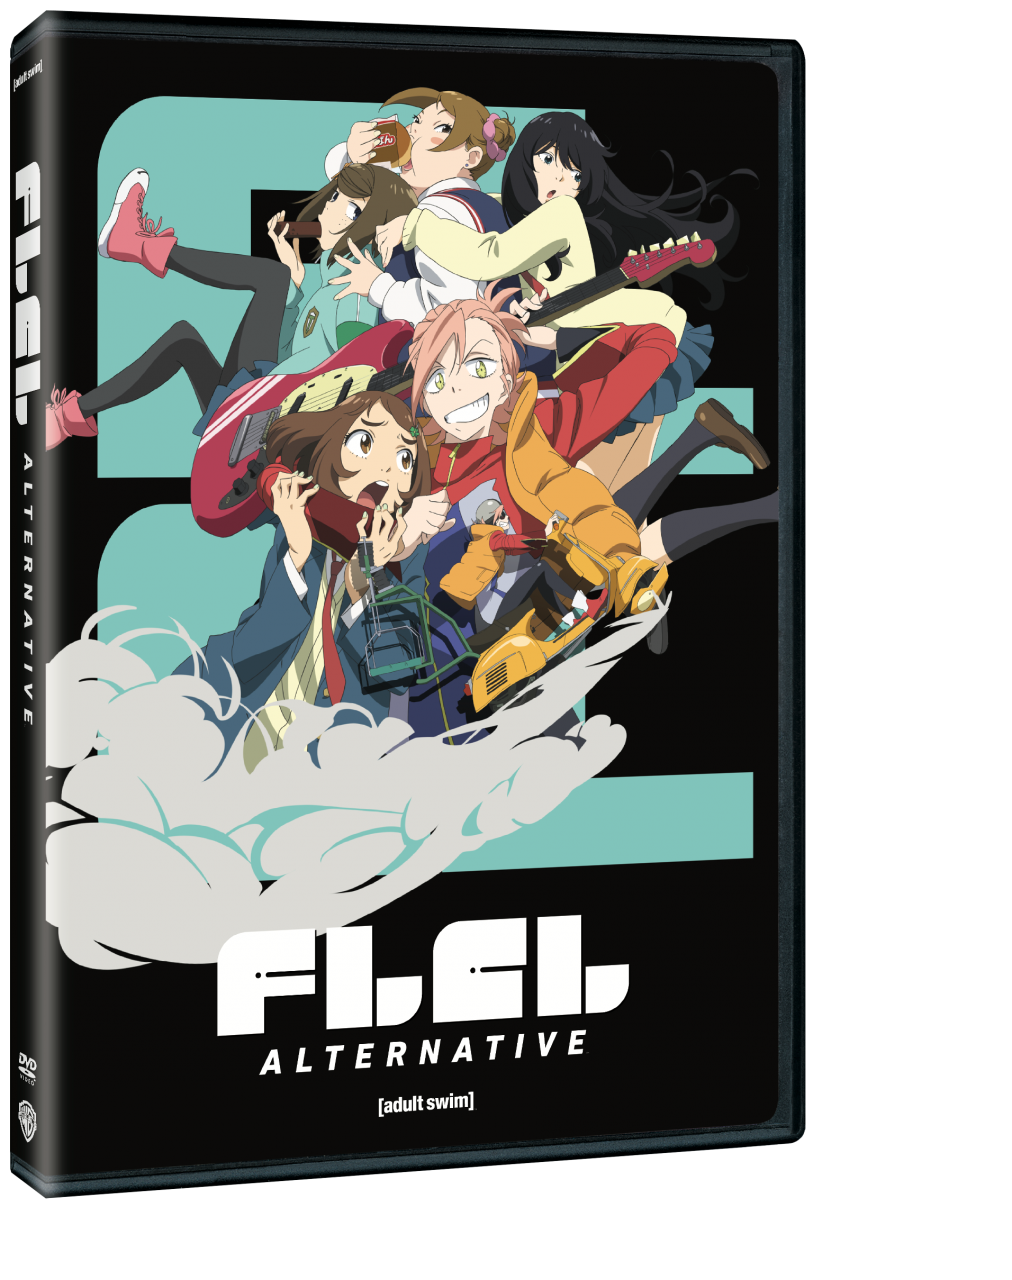 FLCL: Alternative DVD cover (Warner Bros. Home Entertainment)